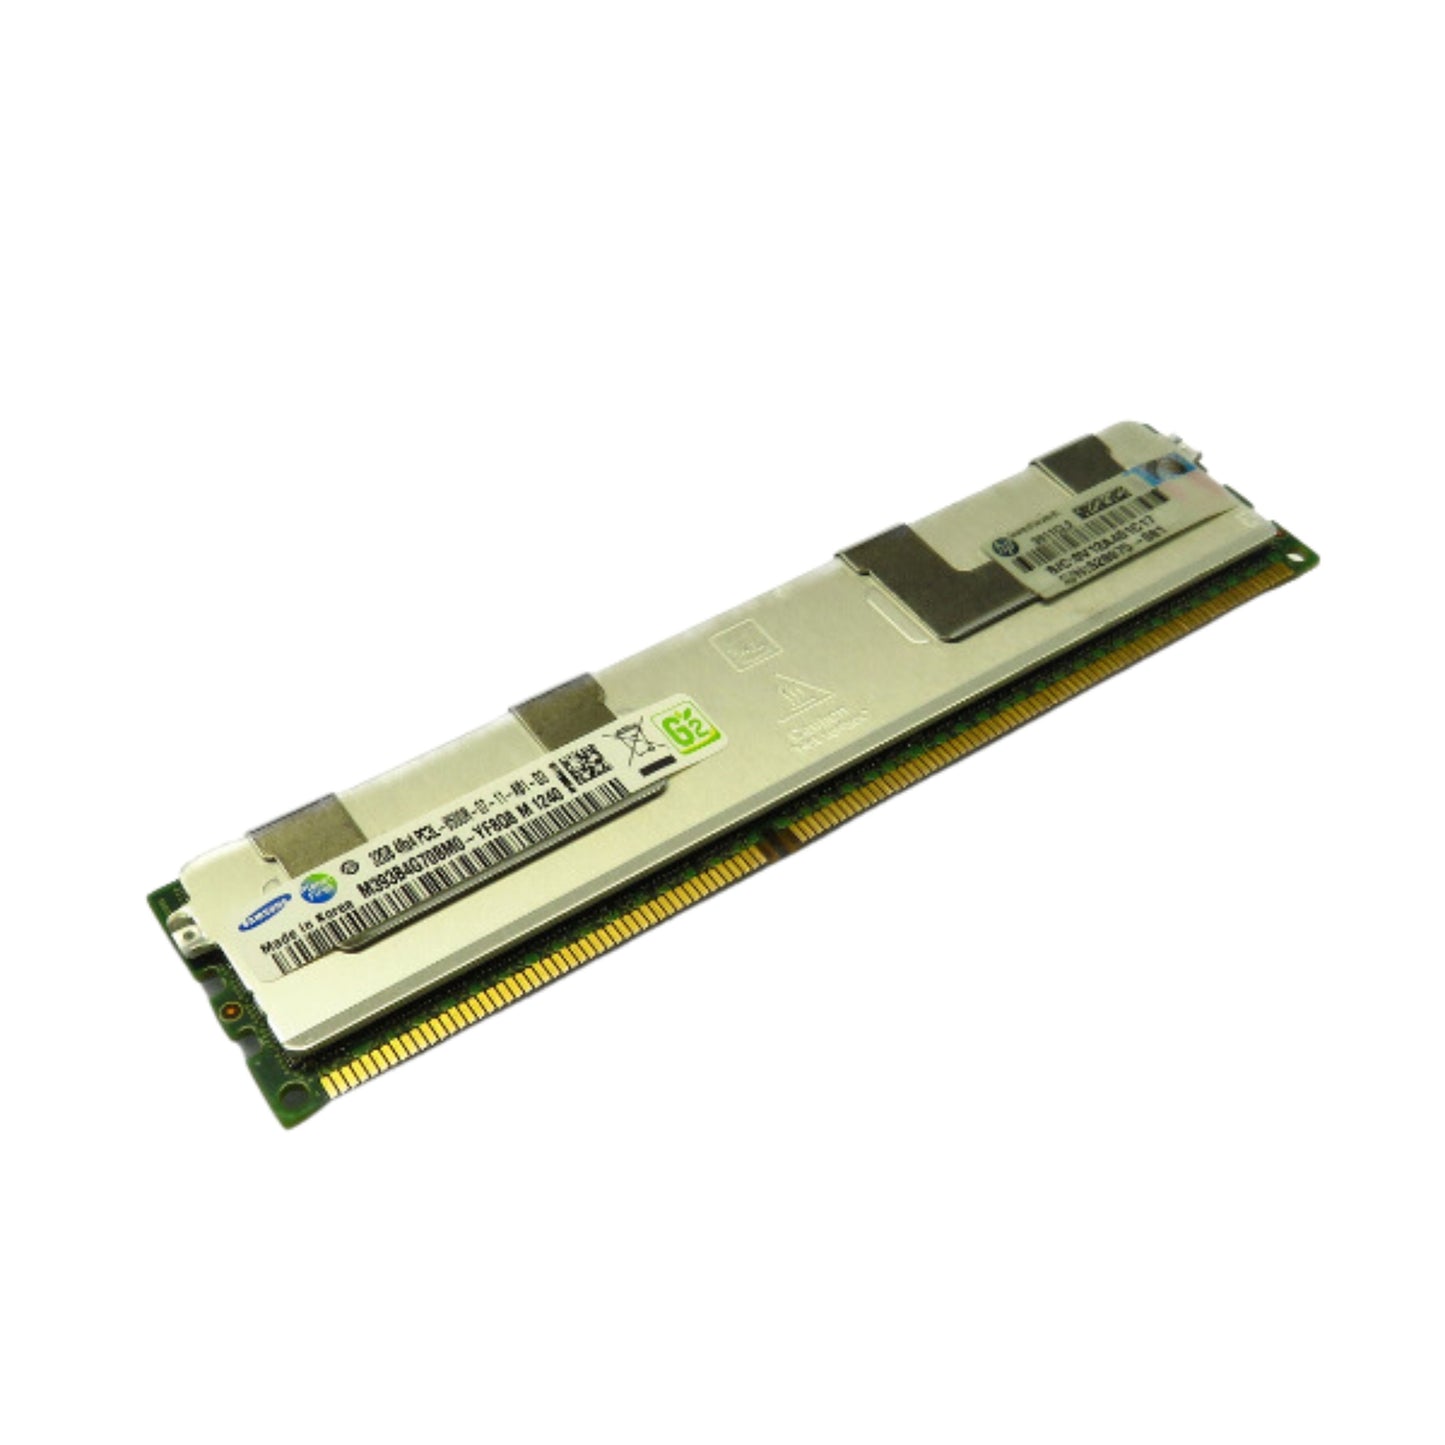 HP 628975-081 32GB 4Rx4 PC3L-8500R 1066MHz DDR3 RDIMM Server Memory (Refurbished)